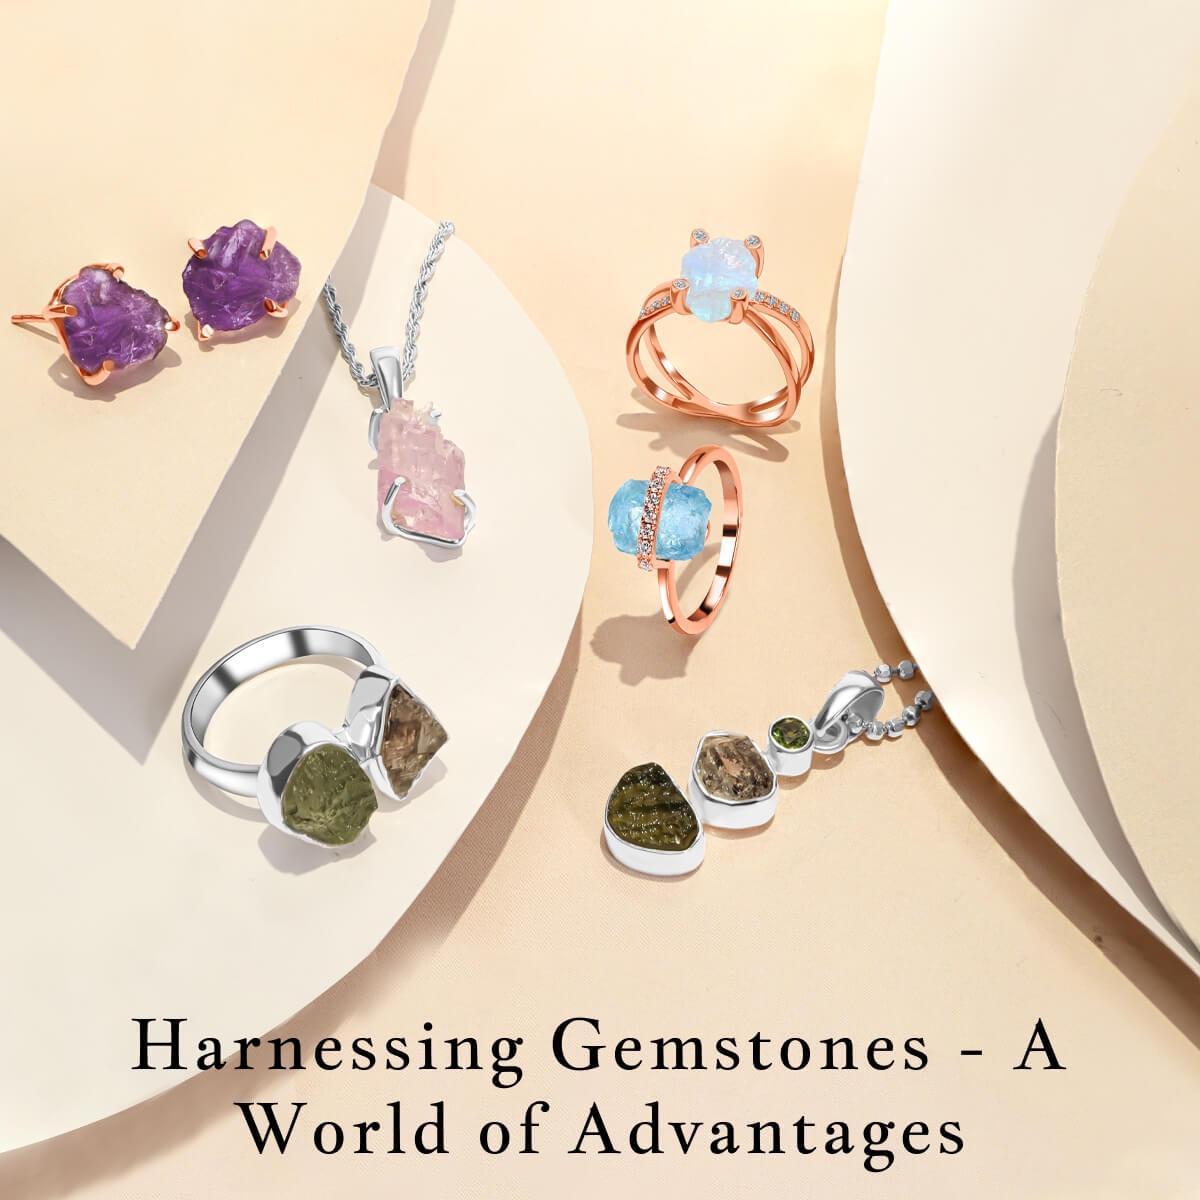 Advantages of gemstone